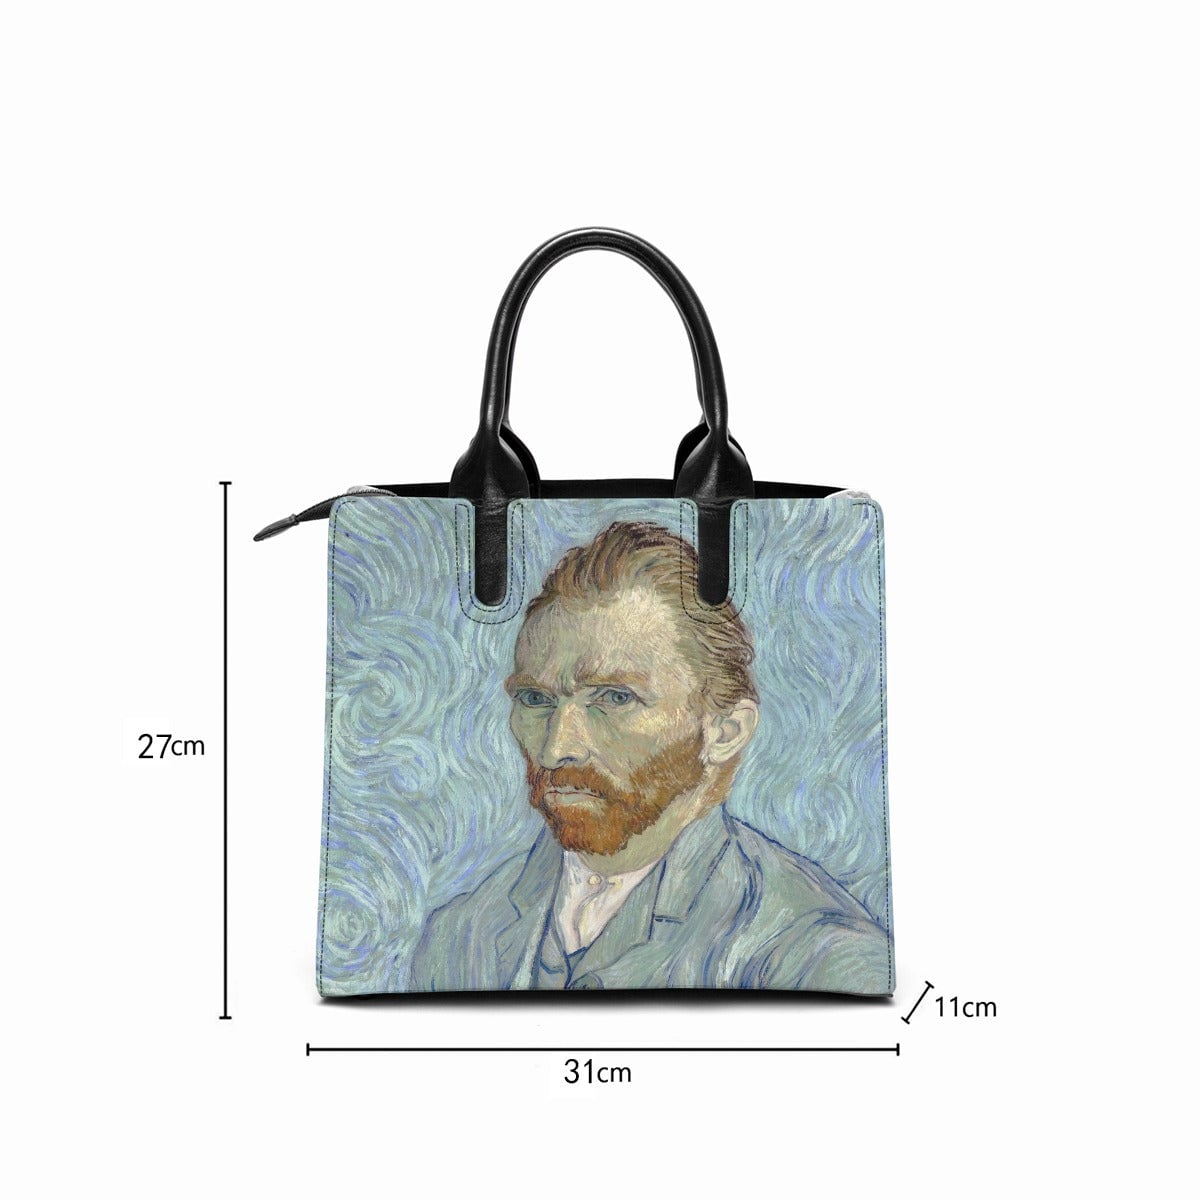 Vincent van Gogh’s Self-portrait Painting Handbag